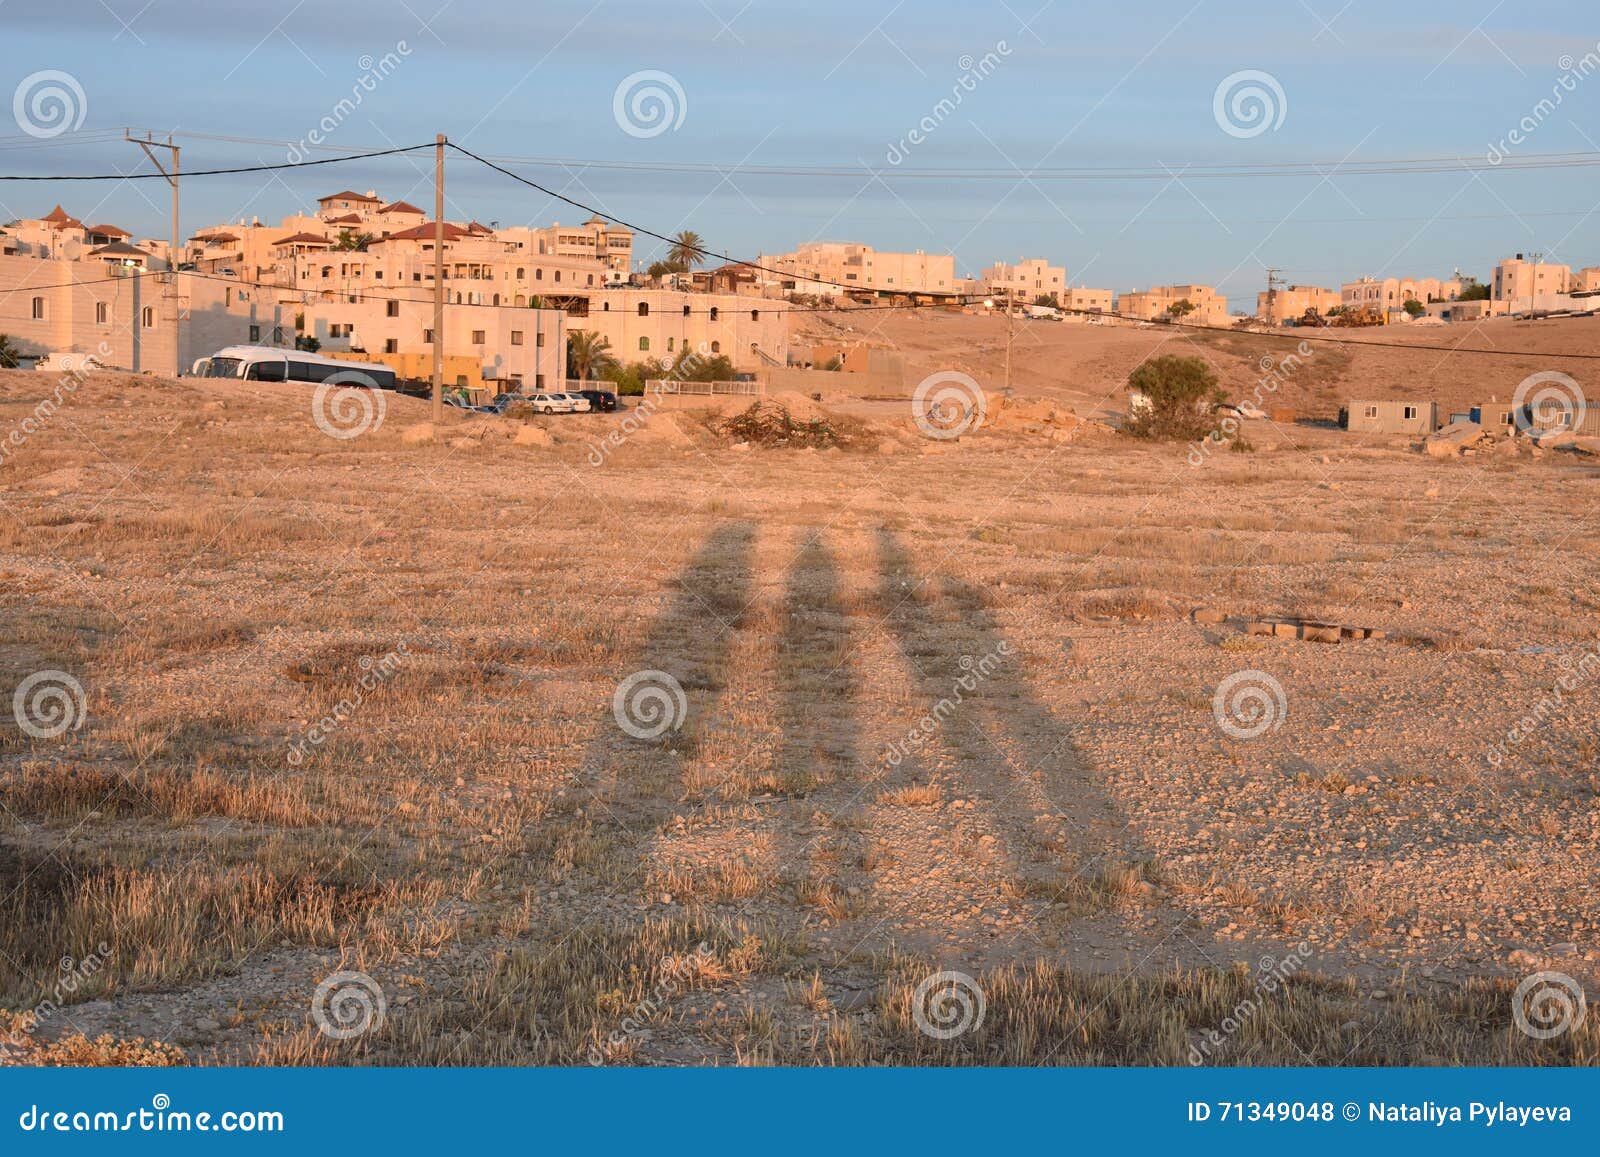 negev desert, arar settlement, three human shadows on the sand at sunset